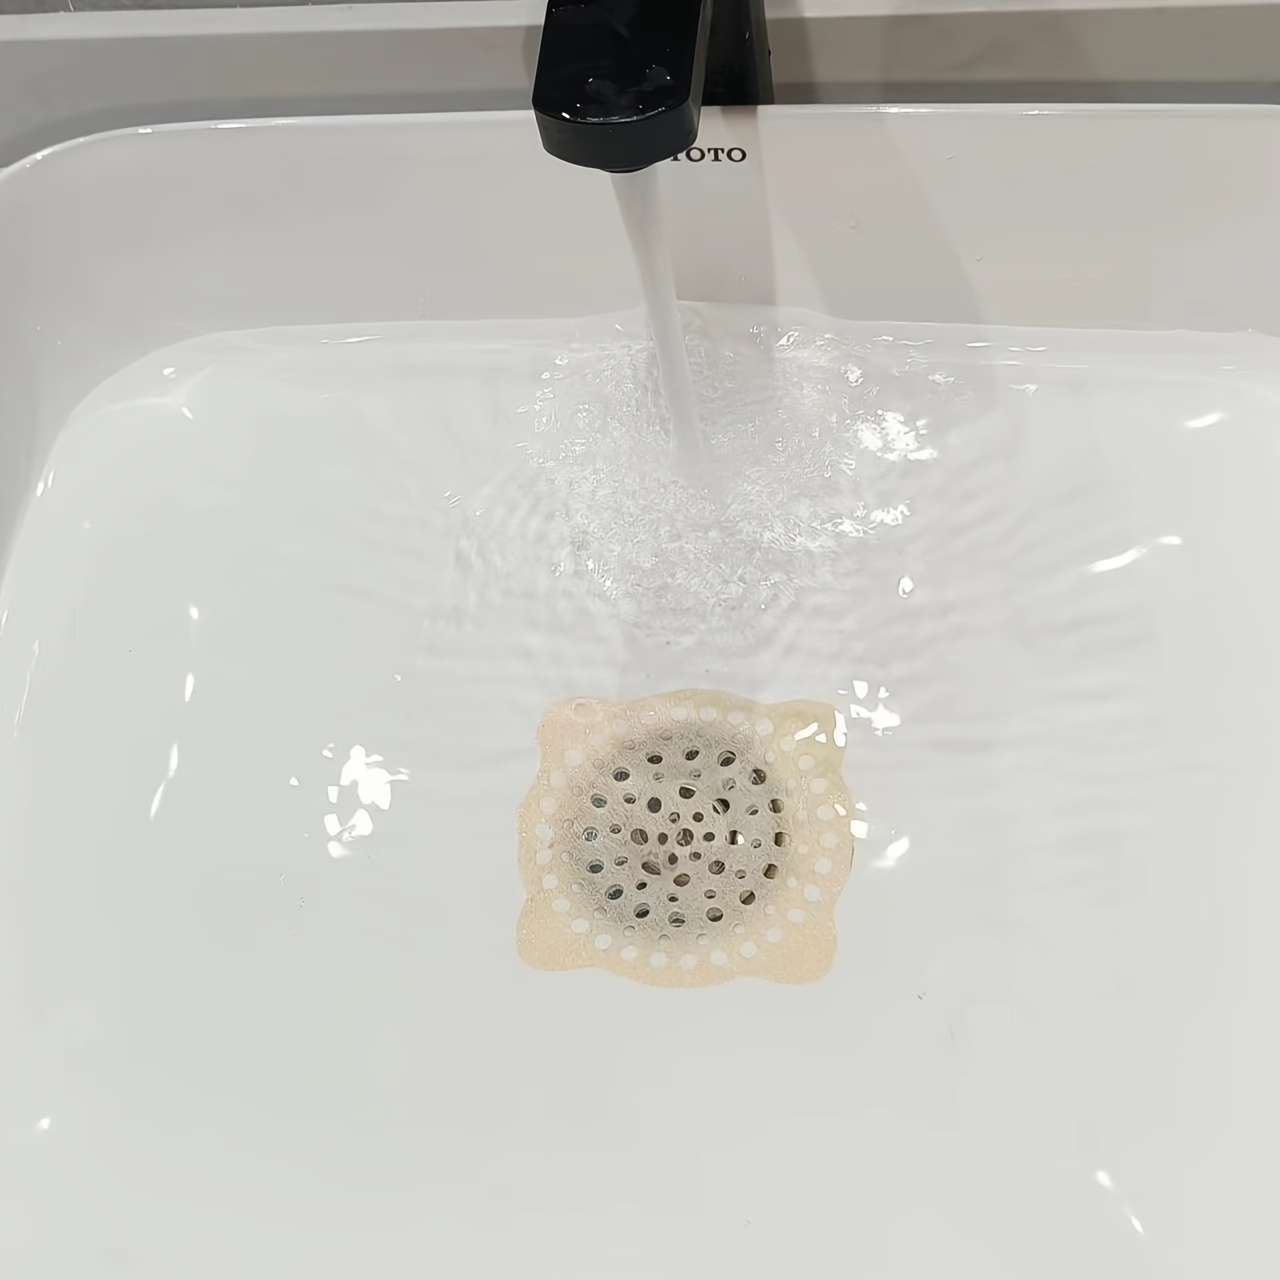 Disposable Shower Drain Hair Catcher Anti blocking Floor - Temu